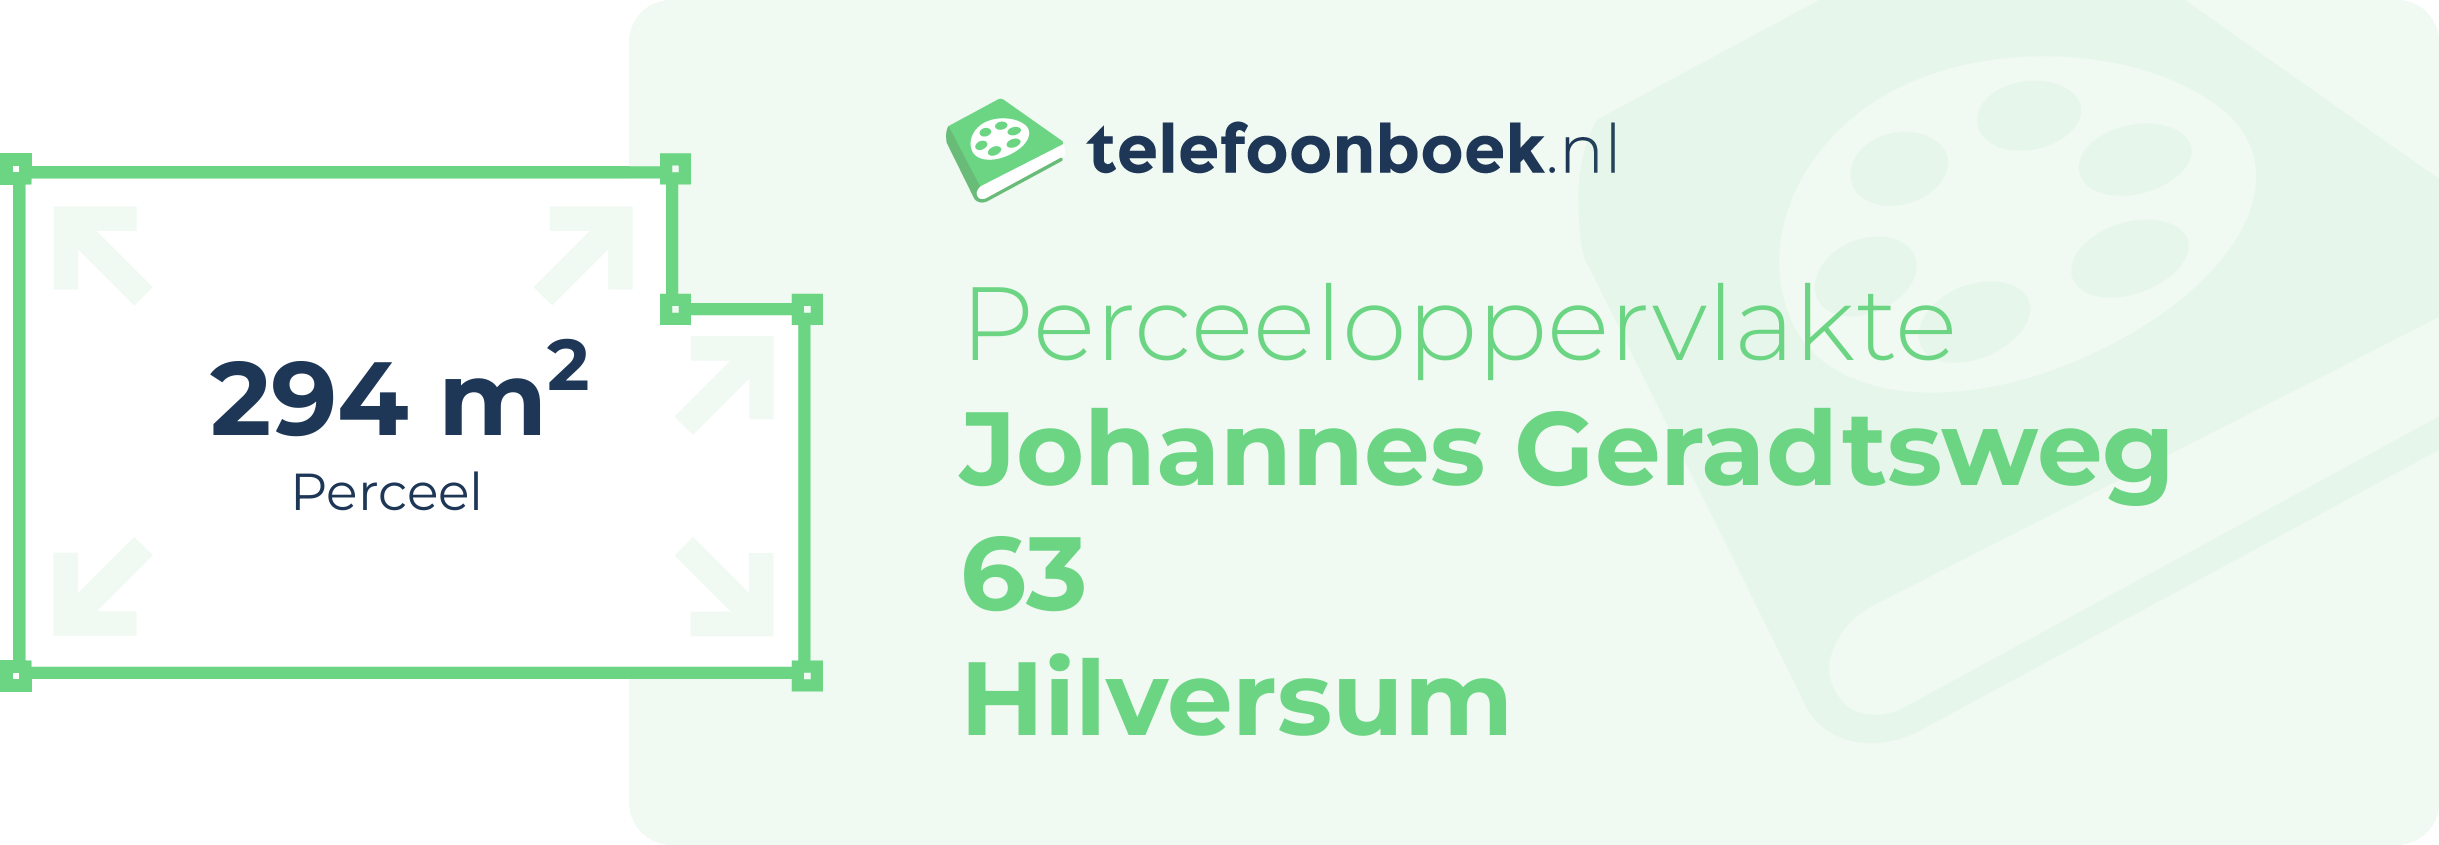 Perceeloppervlakte Johannes Geradtsweg 63 Hilversum